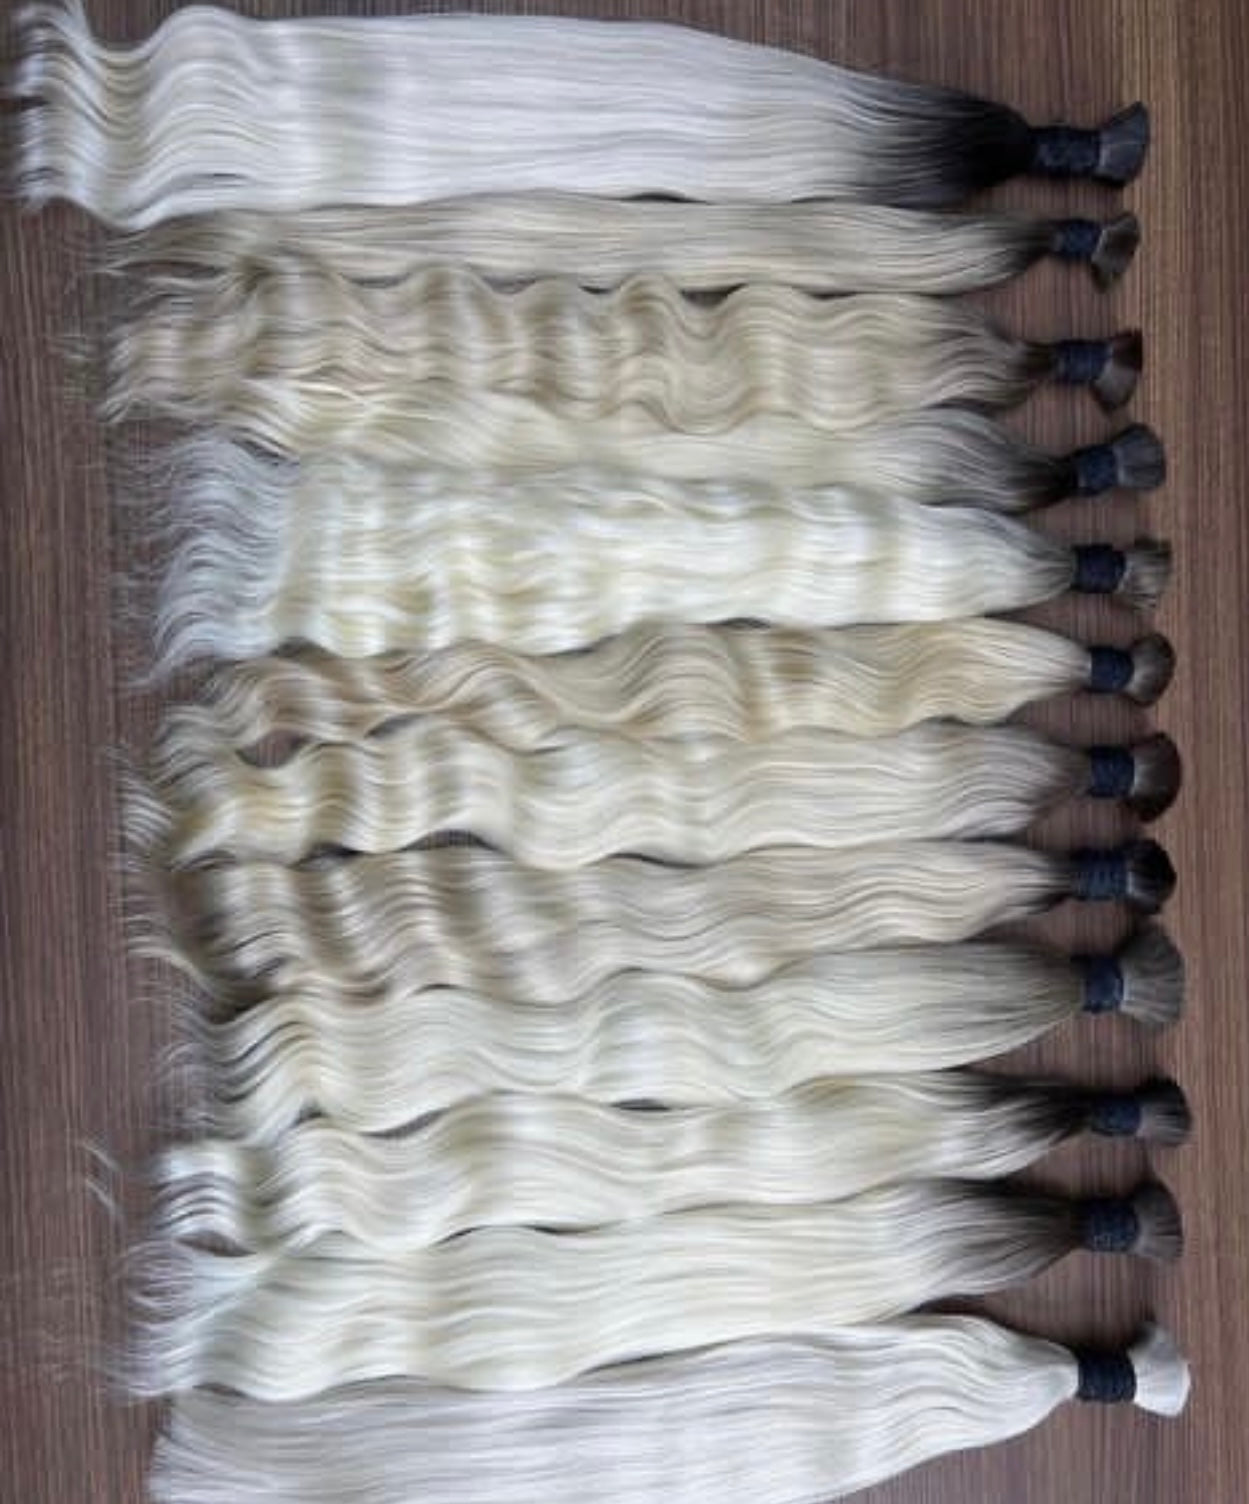 INDIAN CURLY HAIR VENDOR + HAIR SAMPLE